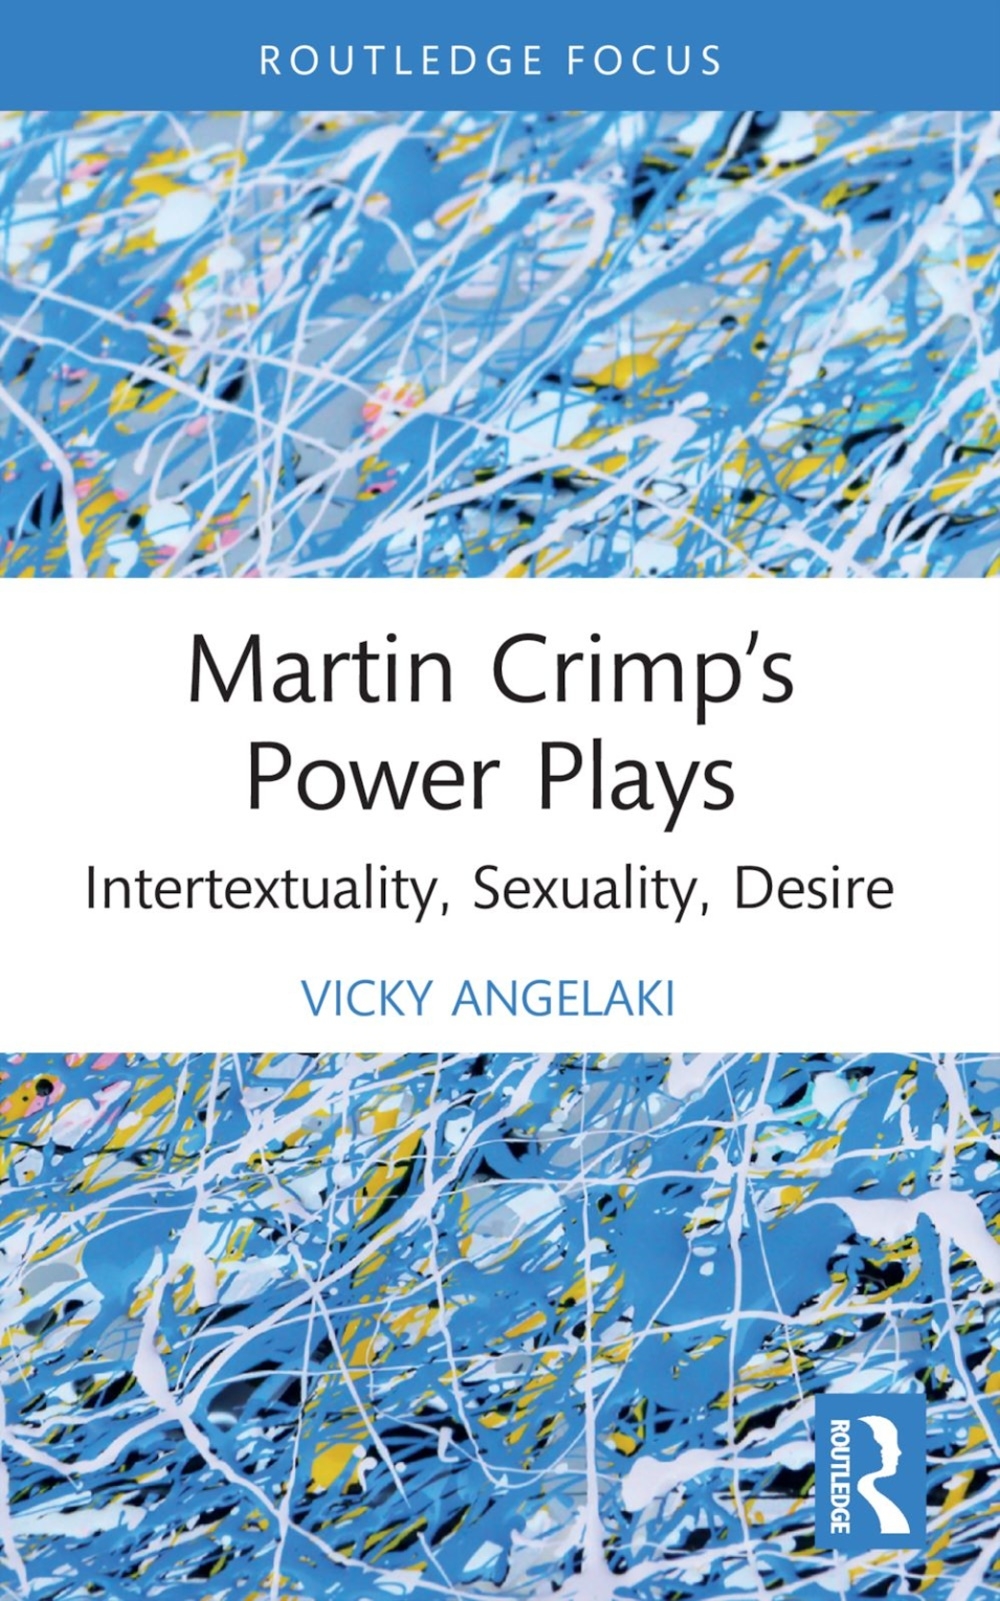 Martin Crimp’s Power Plays: Intertextuality, Sexuality, Desire